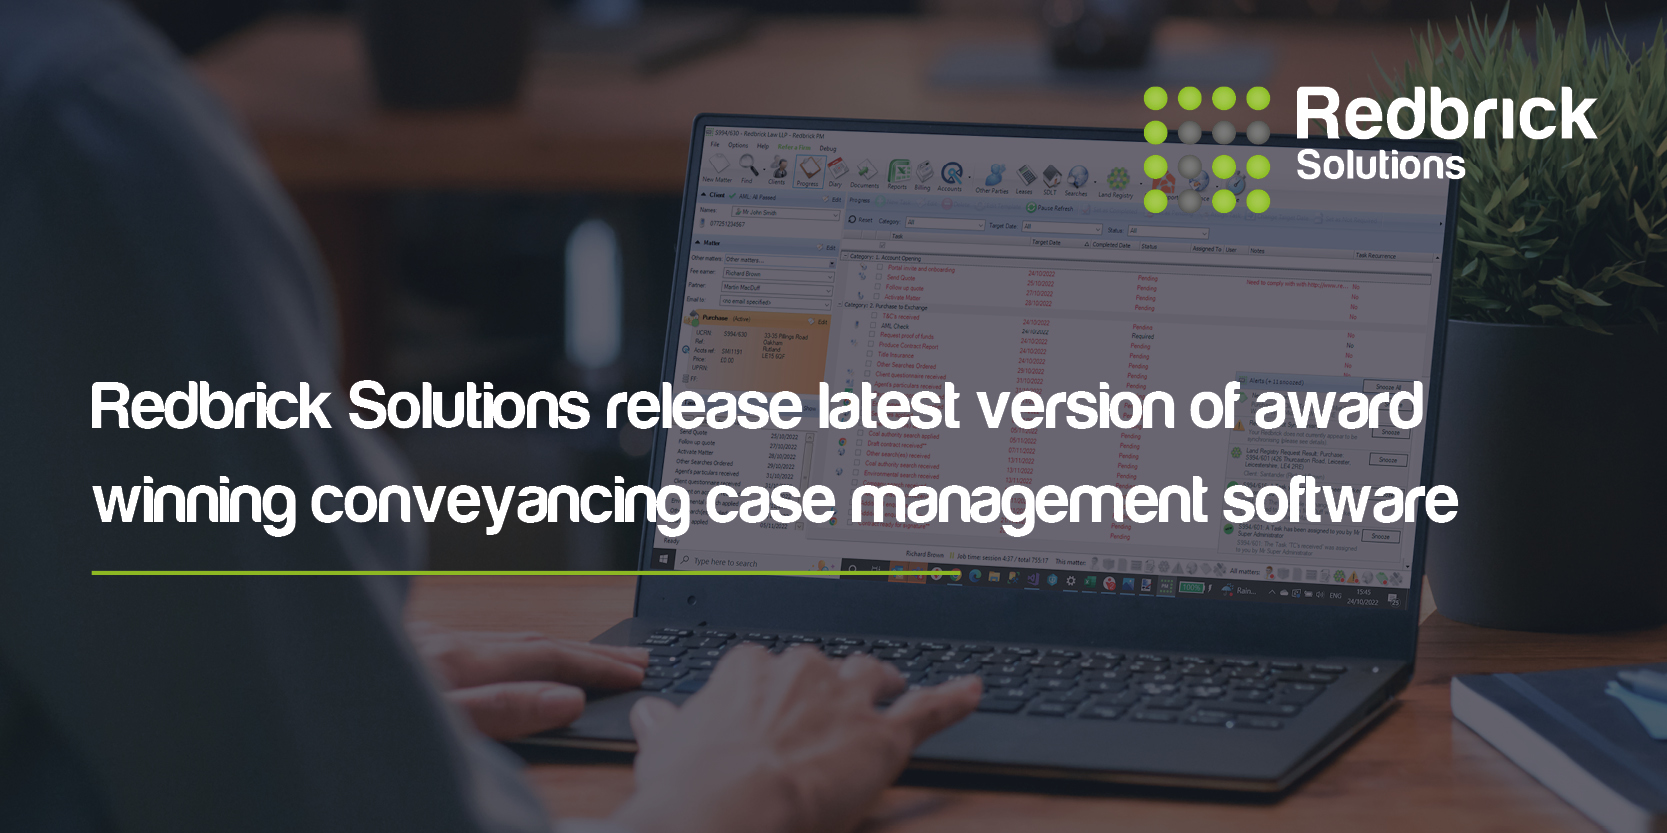 Redbrick Solutions release latest version of award winning conveyancing case management software